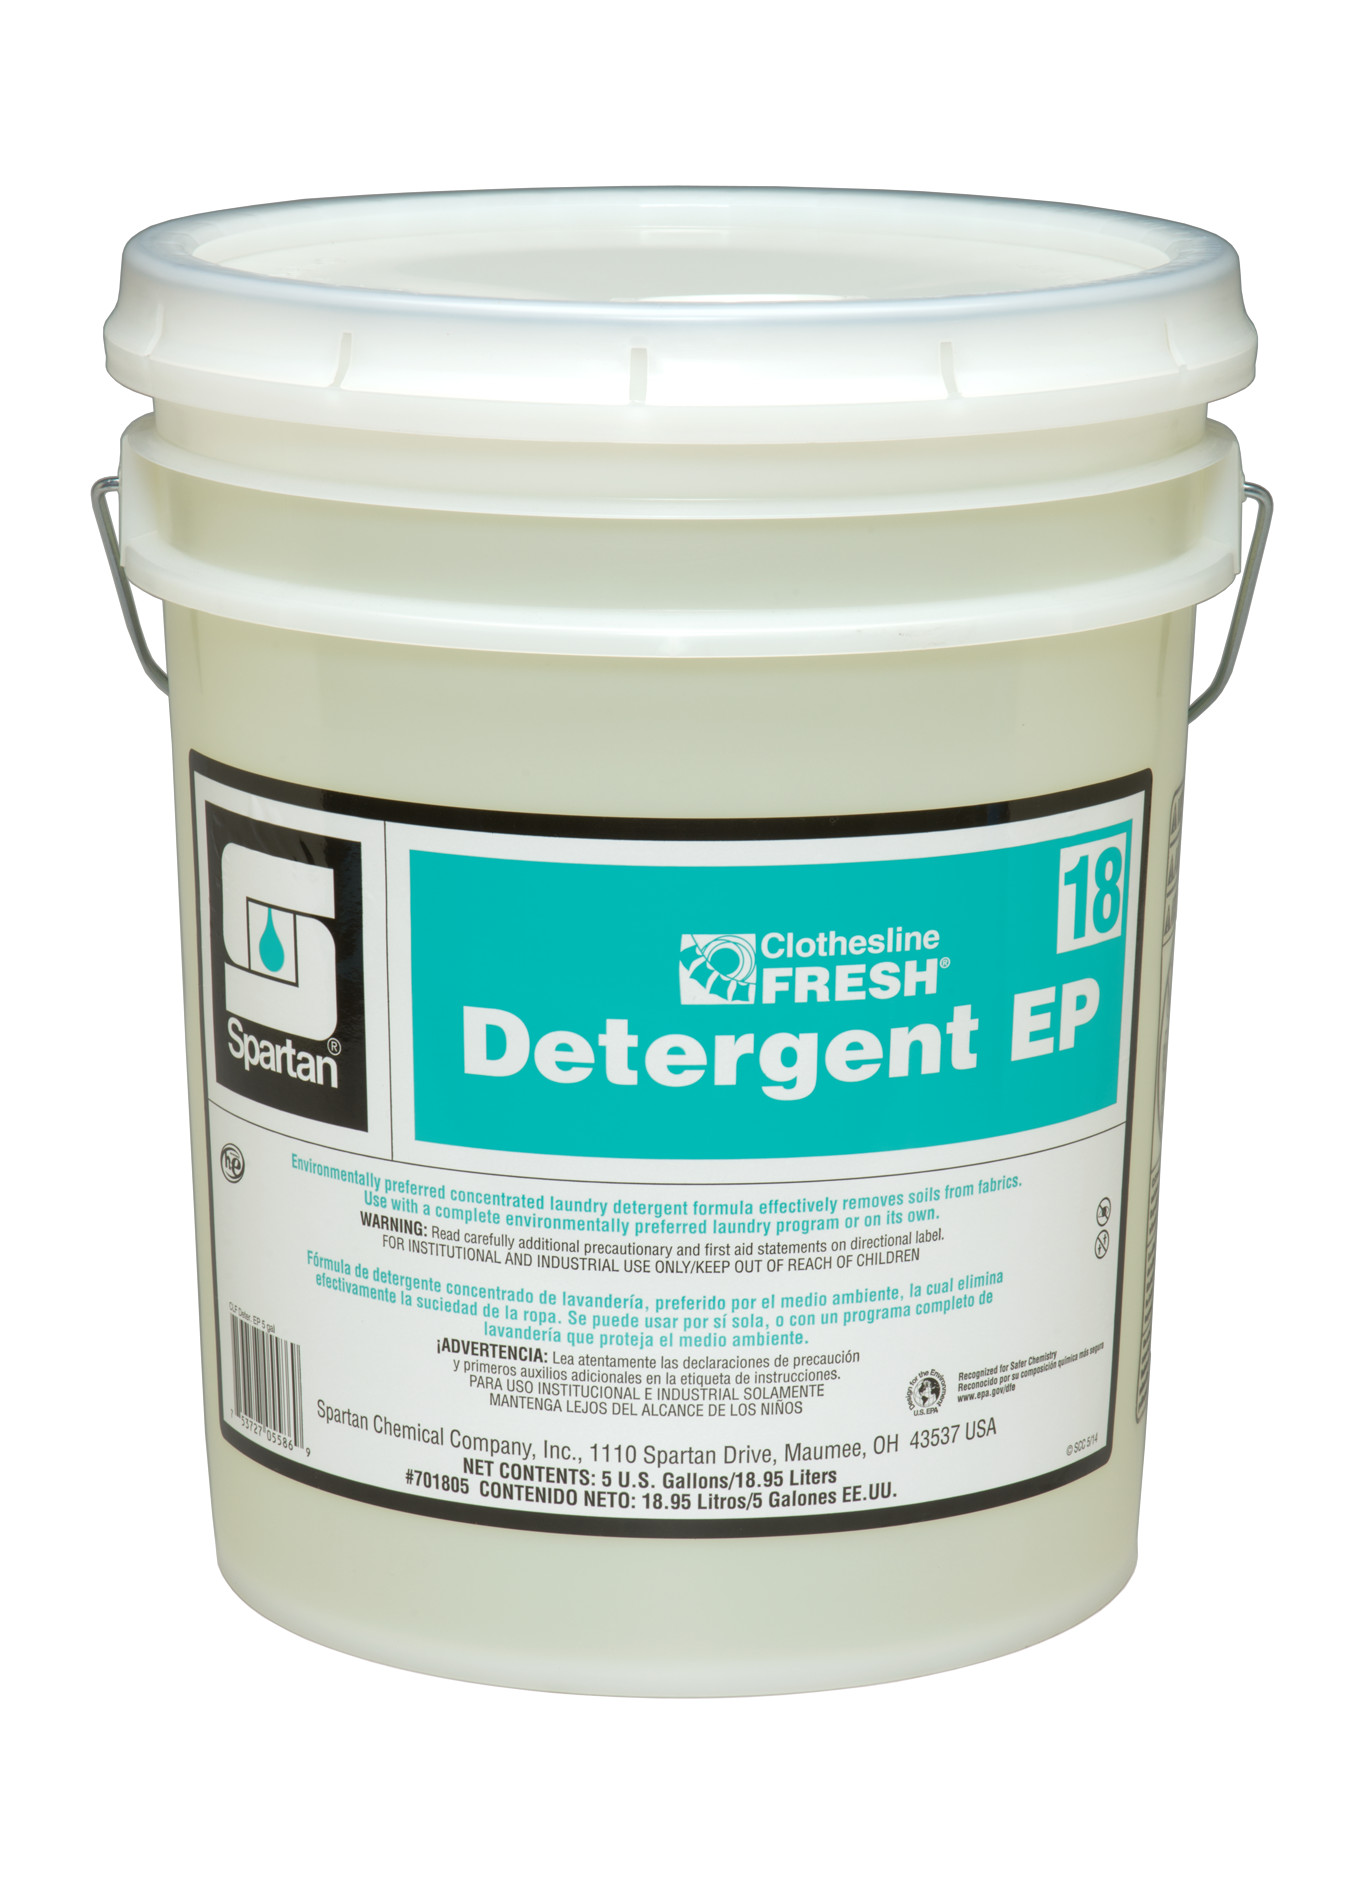 Spartan Chemical Company Clothesline Fresh Detergent EP 18, 5 GAL PAIL